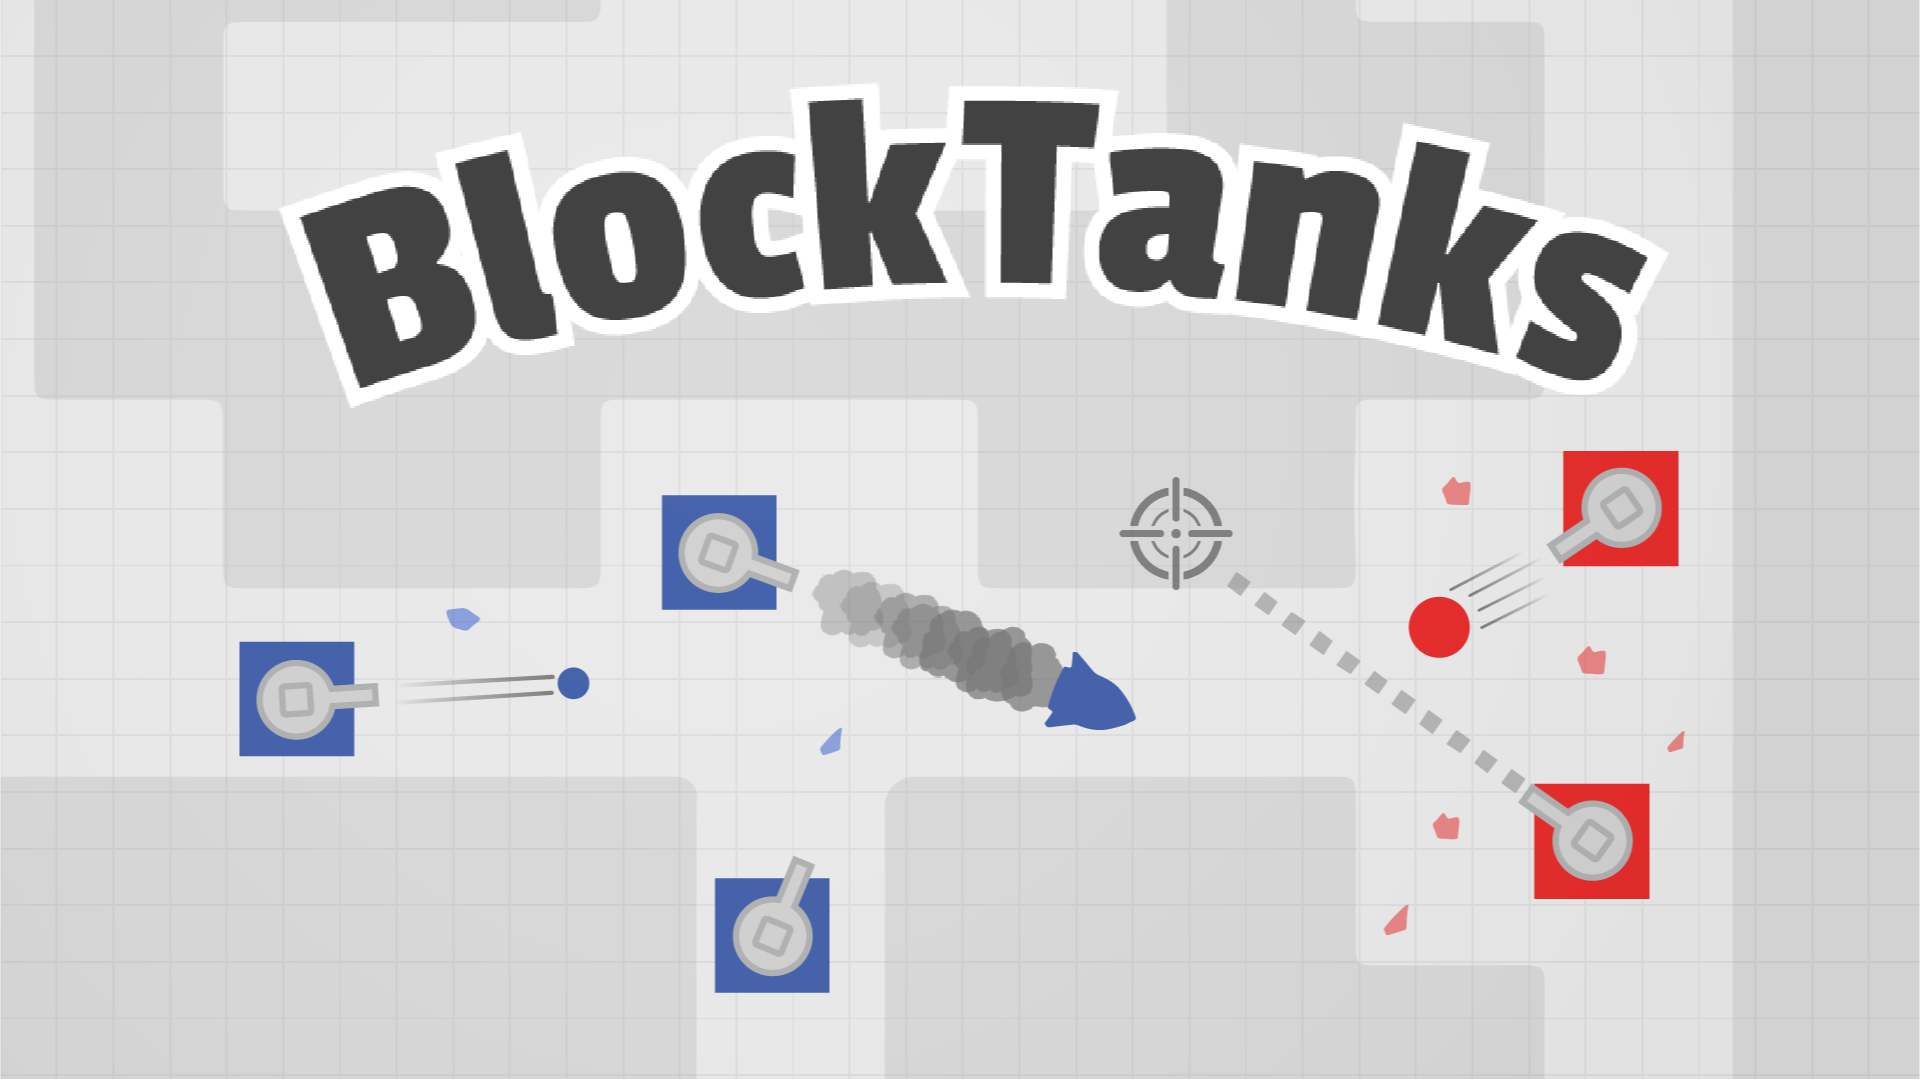 tank io games - piupiu.io – Apps on Google Play